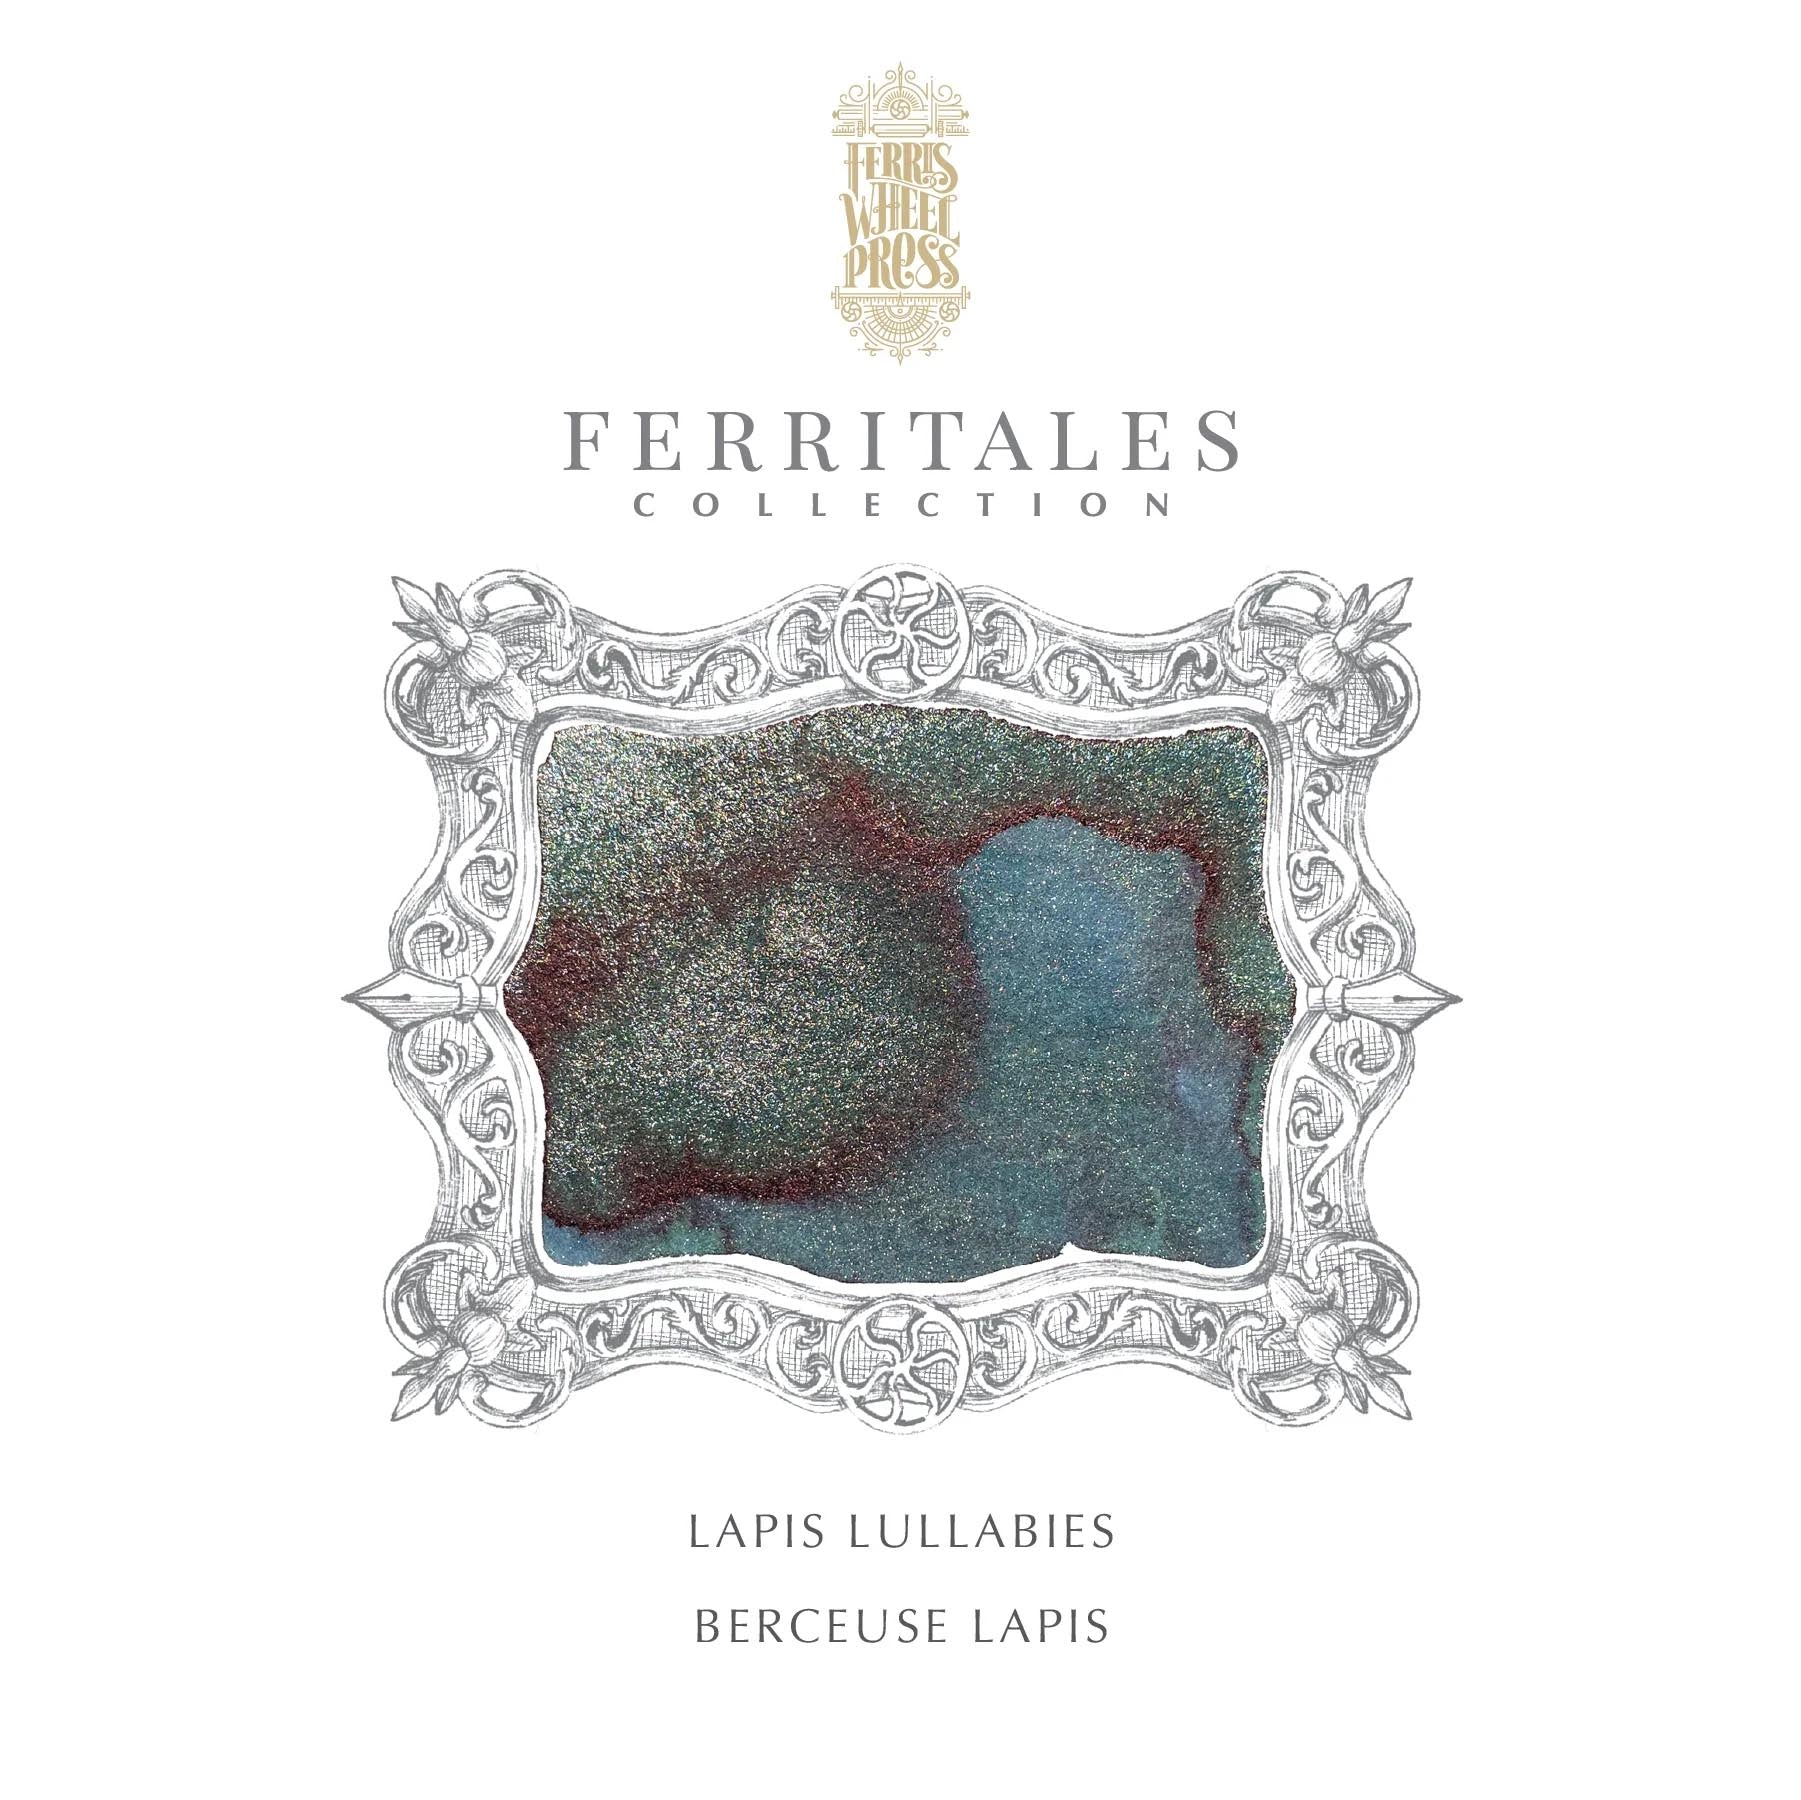 FerriTales™ Ferris Wheel Press | Once Upon A Time | Lapis Lullabies 20ml